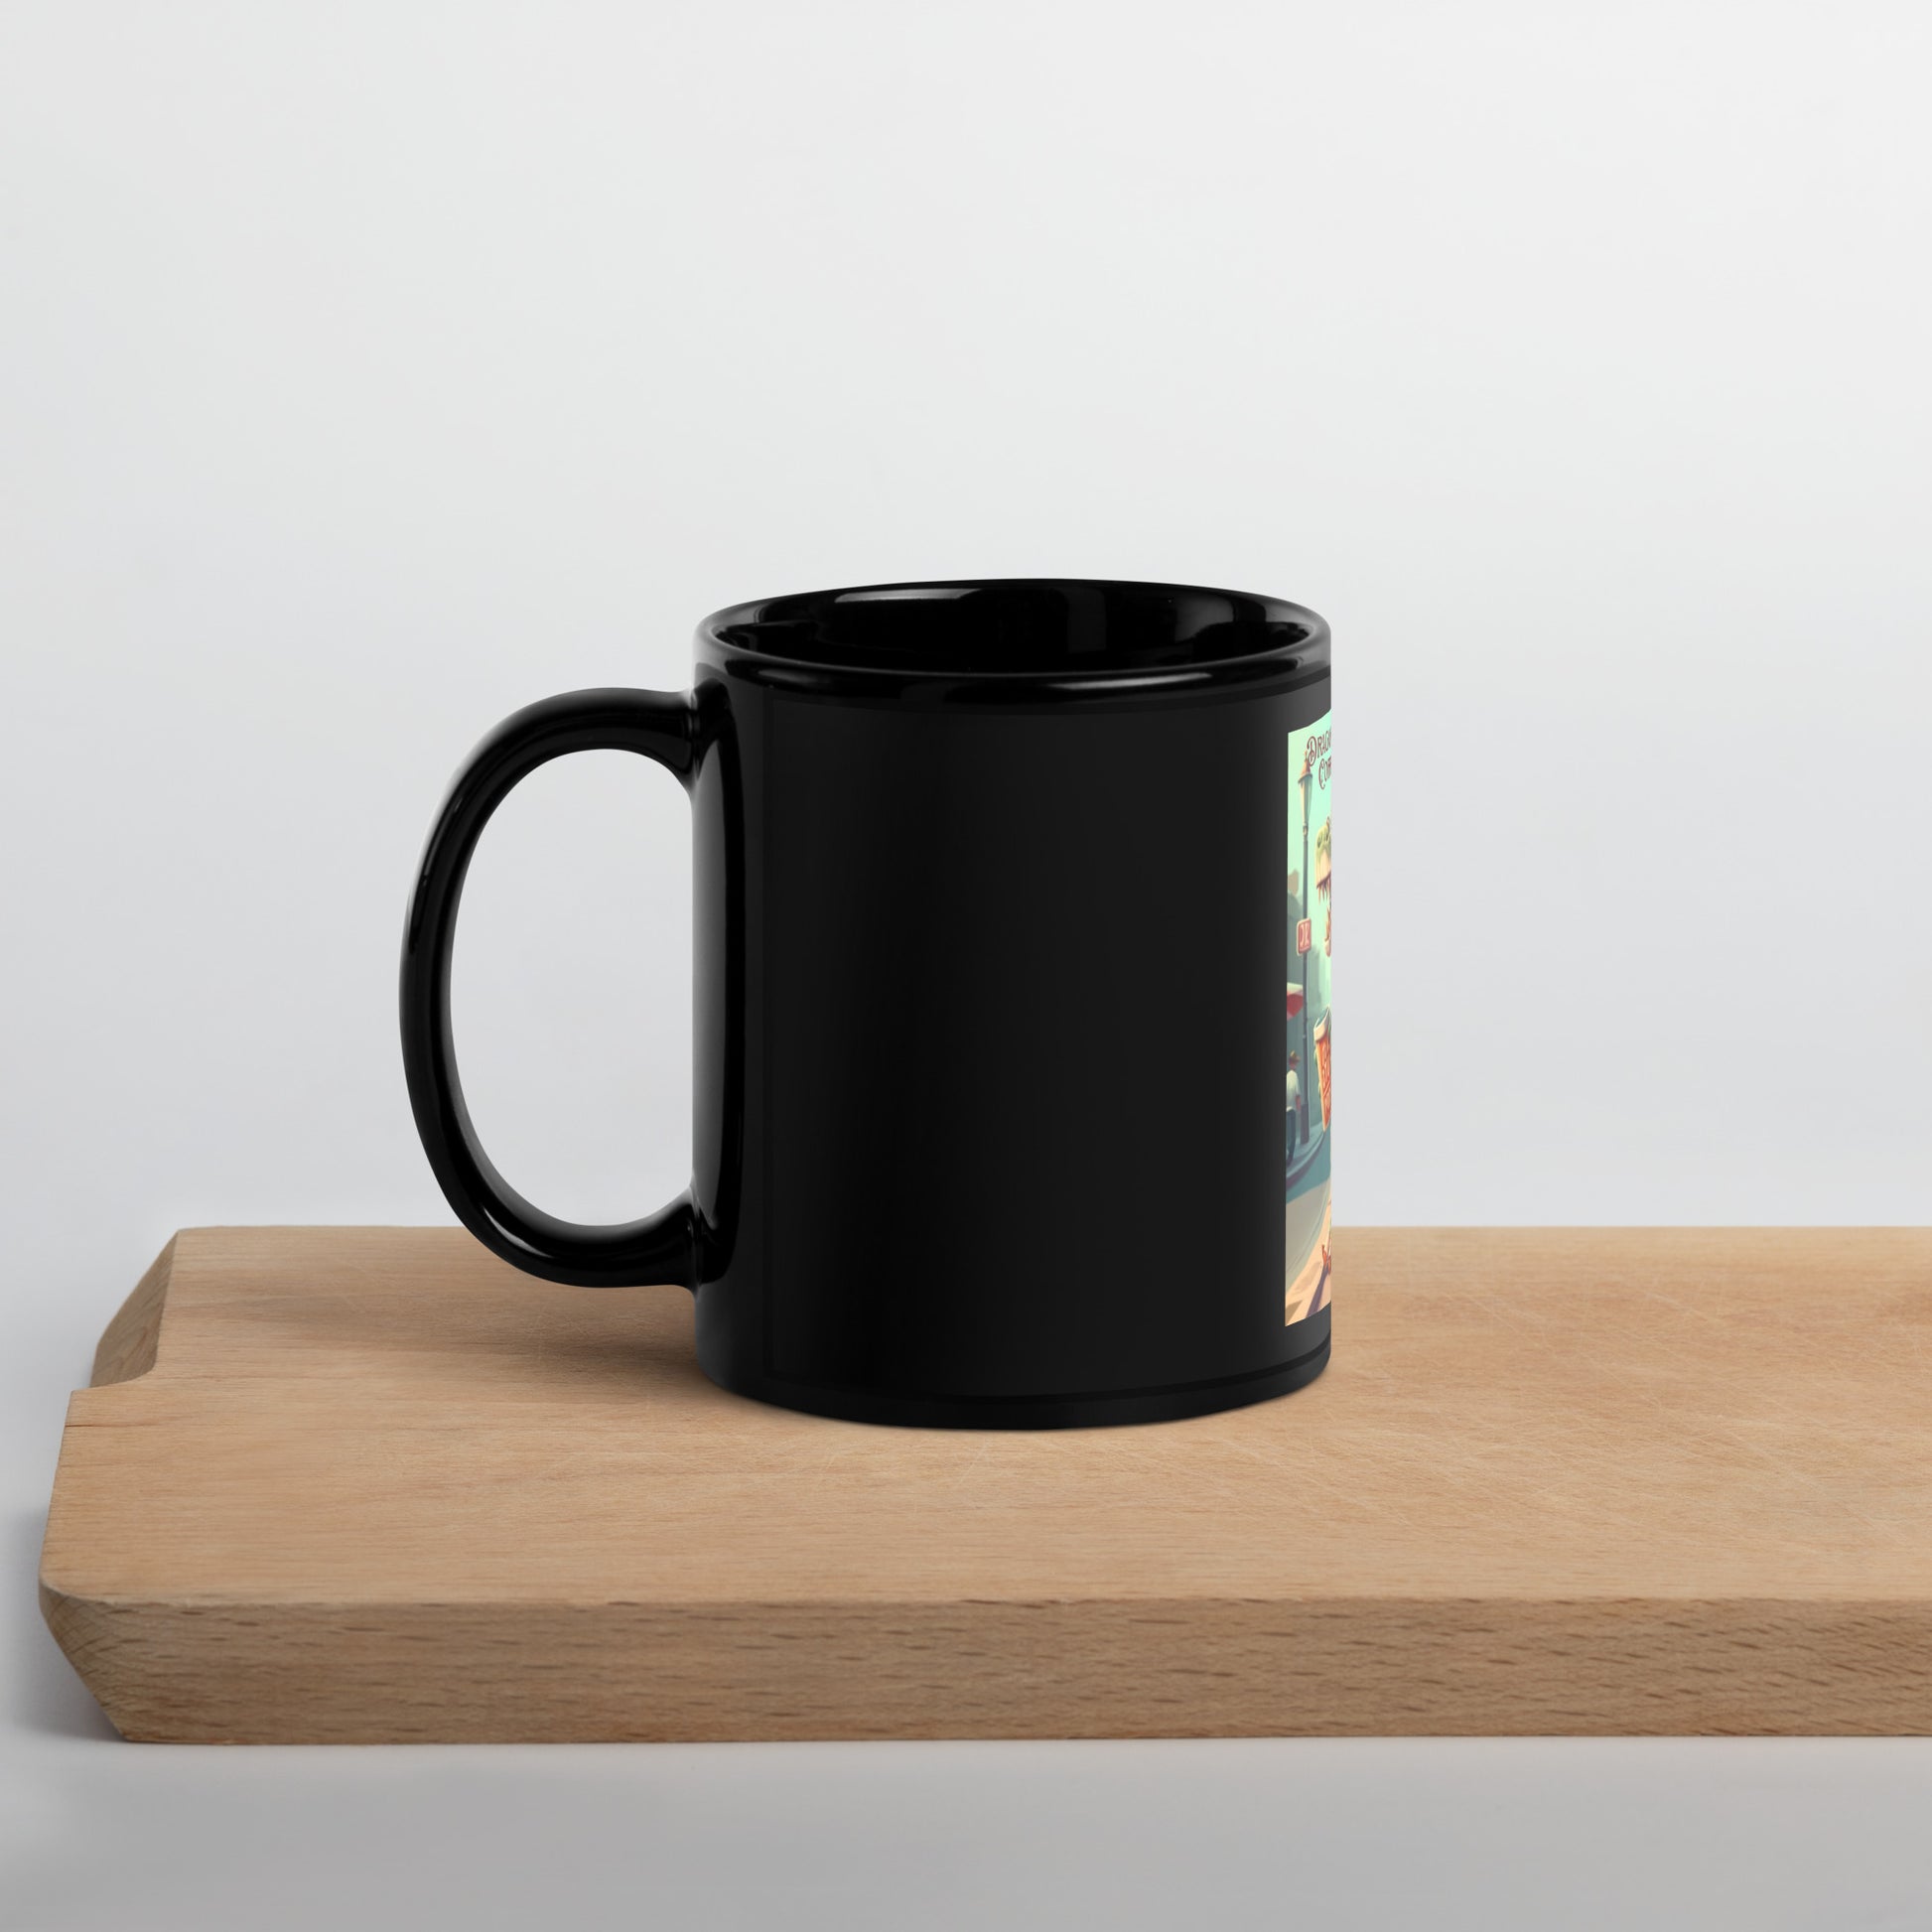 Dragon and Coffee: A Love Story Coffee Mug - B.Niki Designs